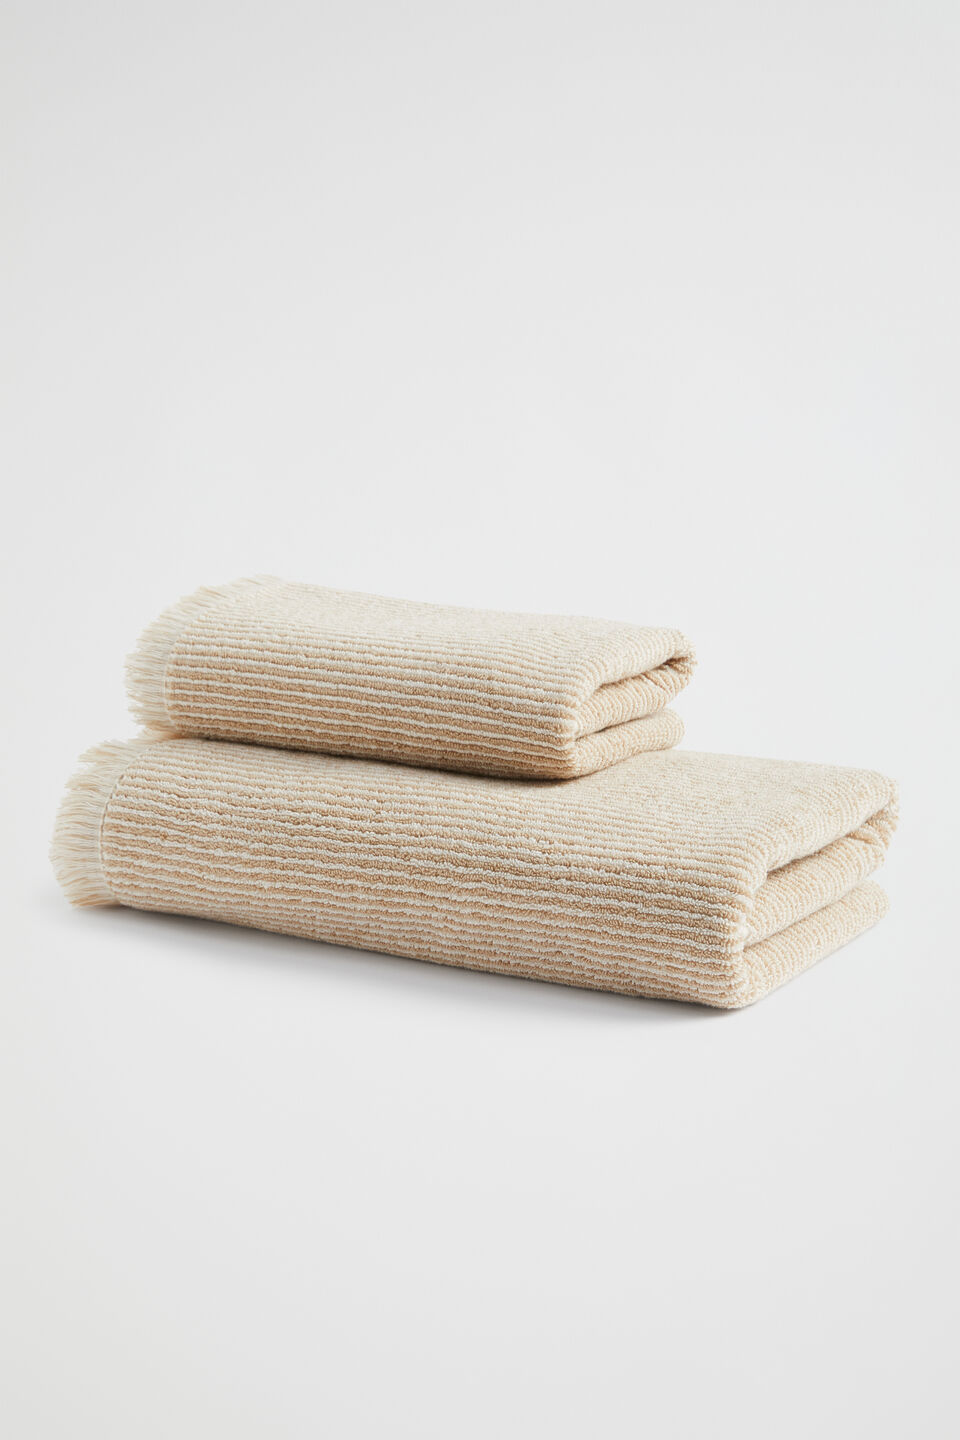 Stripe Textured Towel  Stone